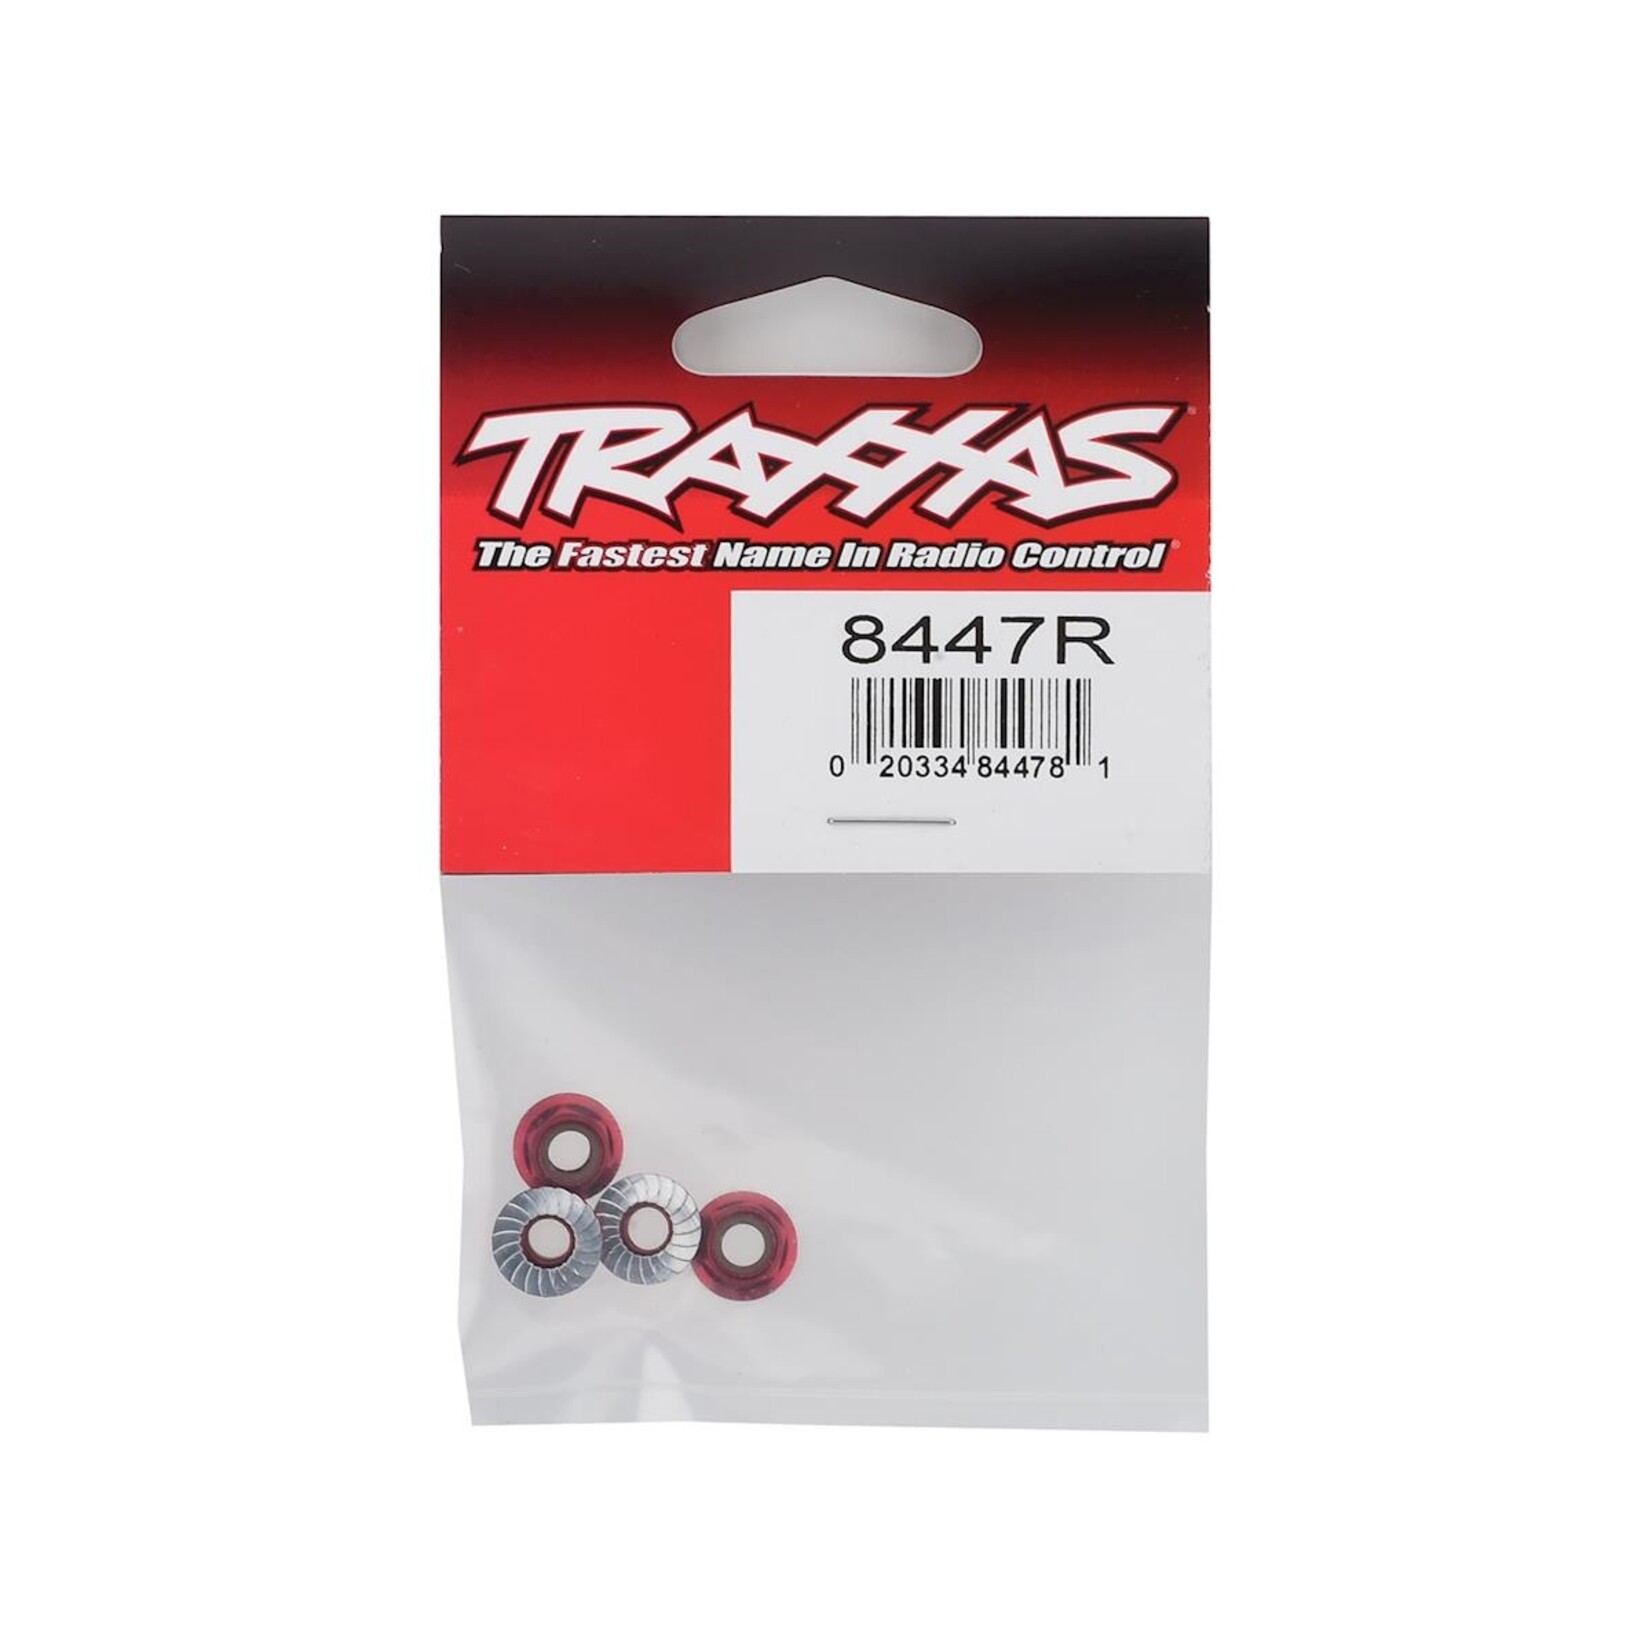 Traxxas Traxxas 5mm Aluminum Flanged Nylon Locking Nuts (Red) (4) #8447R